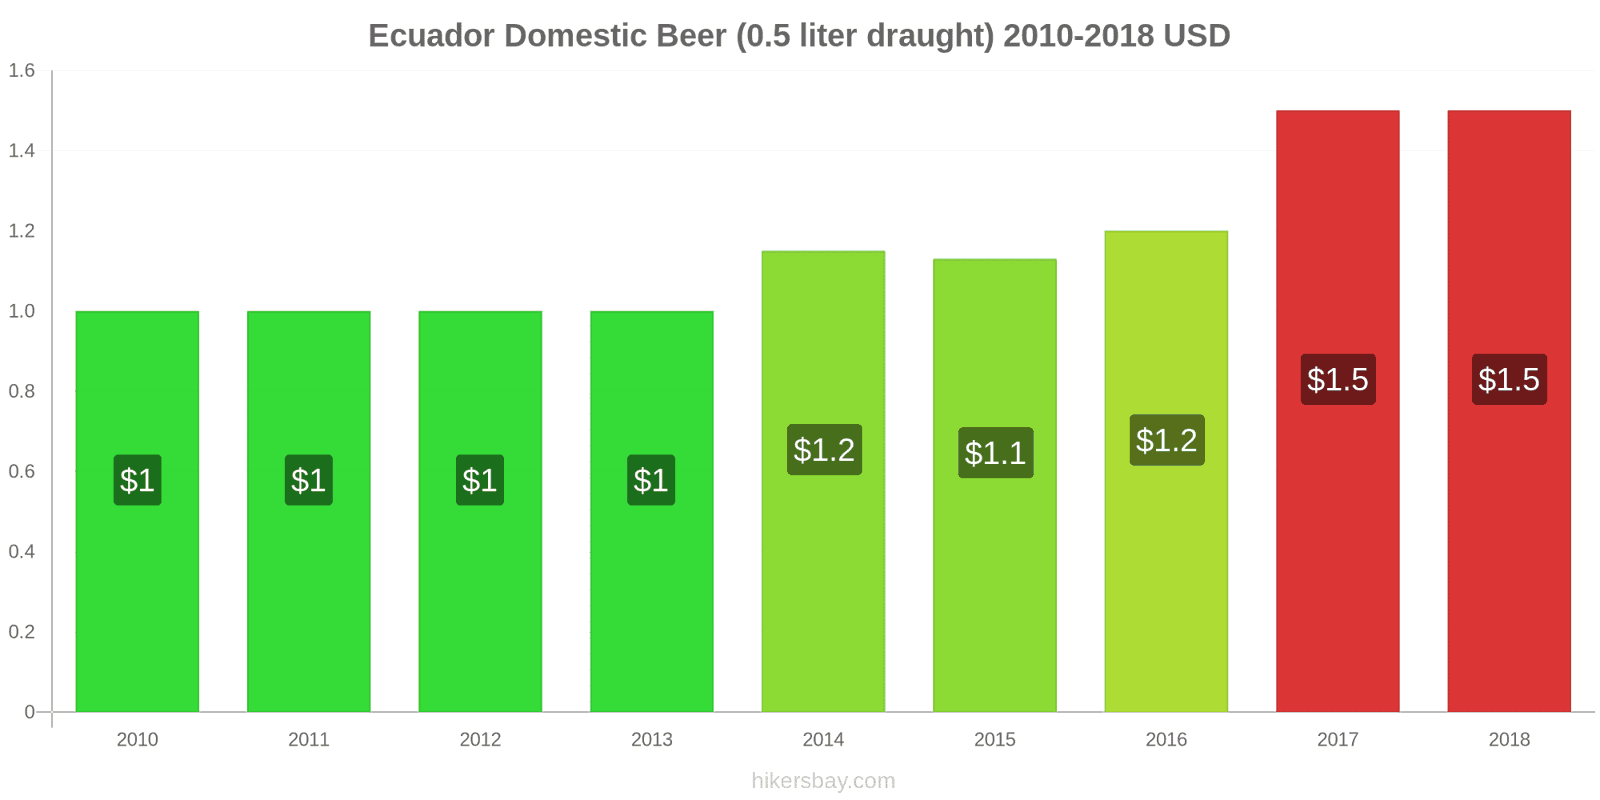 Ecuador price changes Domestic Beer (0.5 liter draught) hikersbay.com